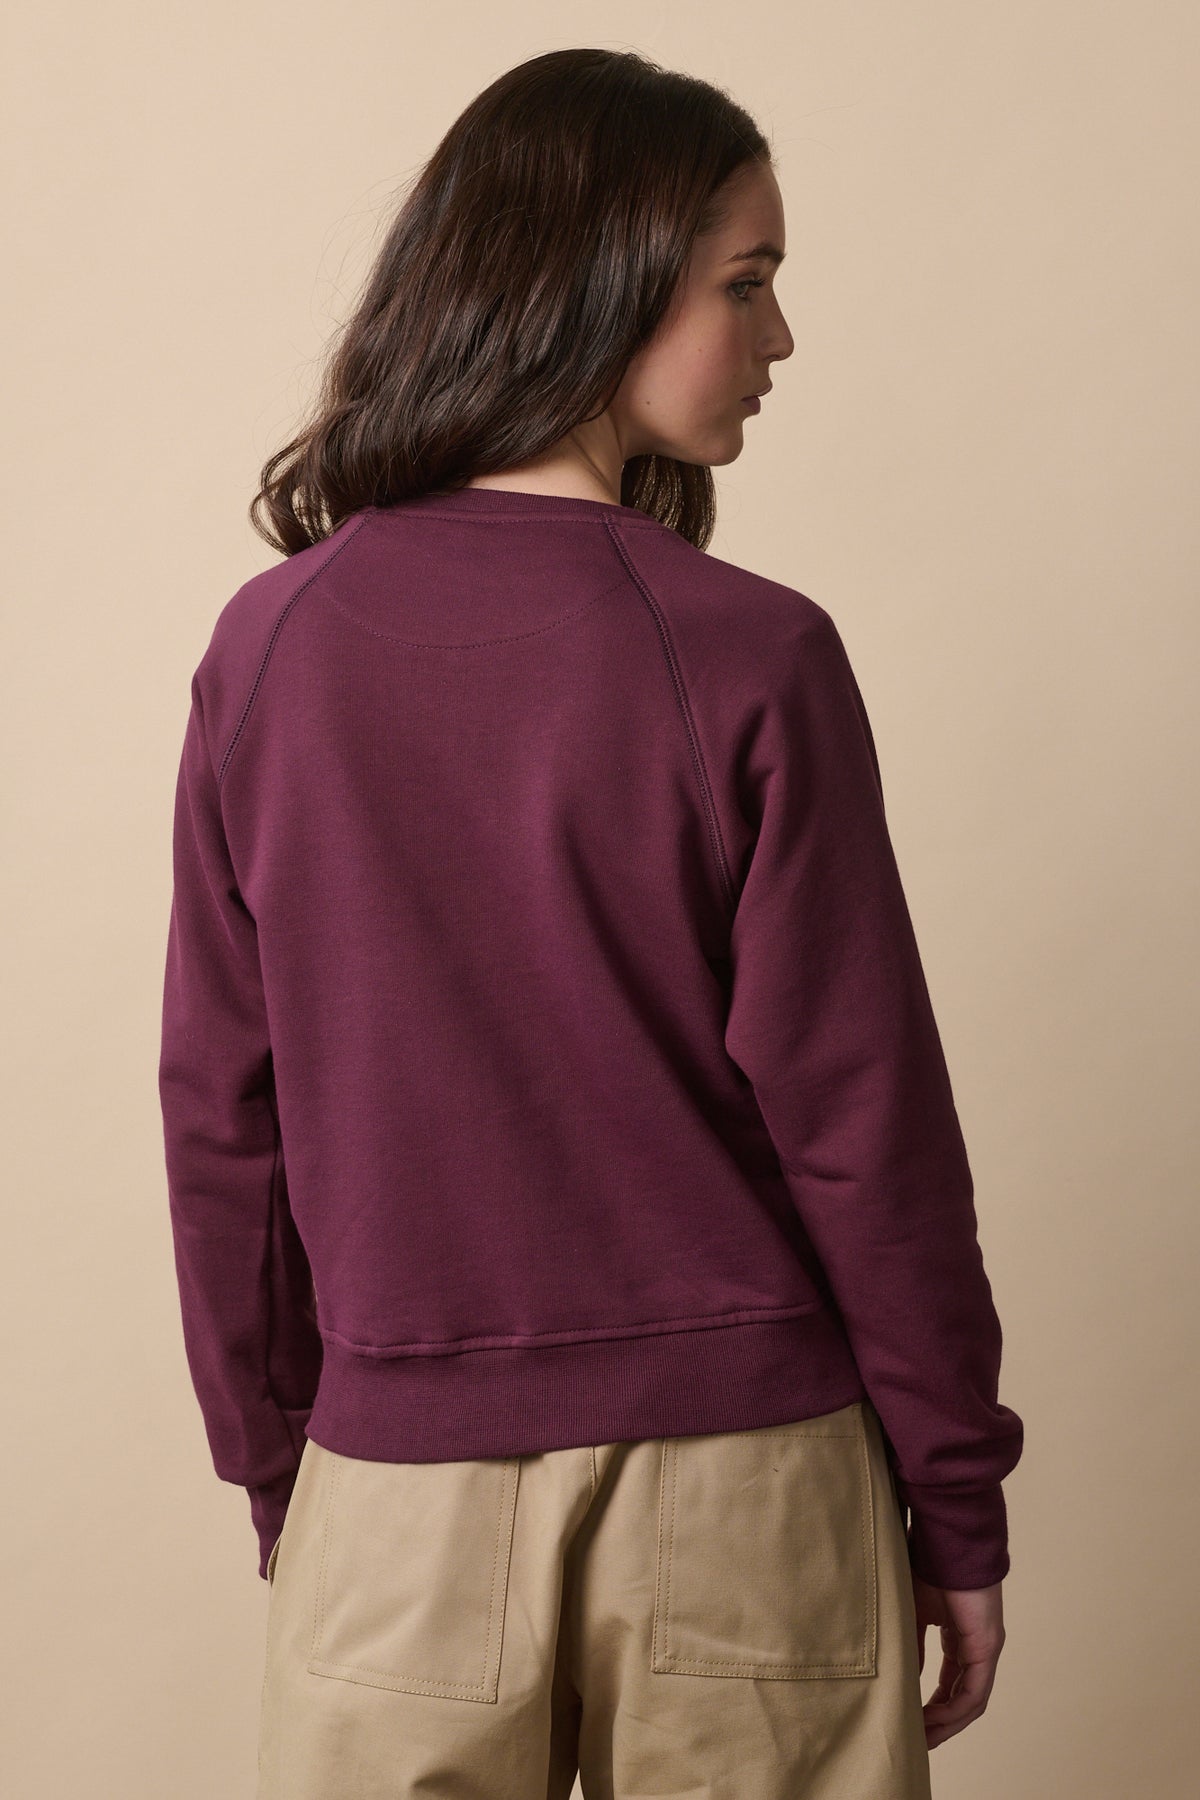 
            thigh up of the back of female wearing raglan sweatshirt in plum 